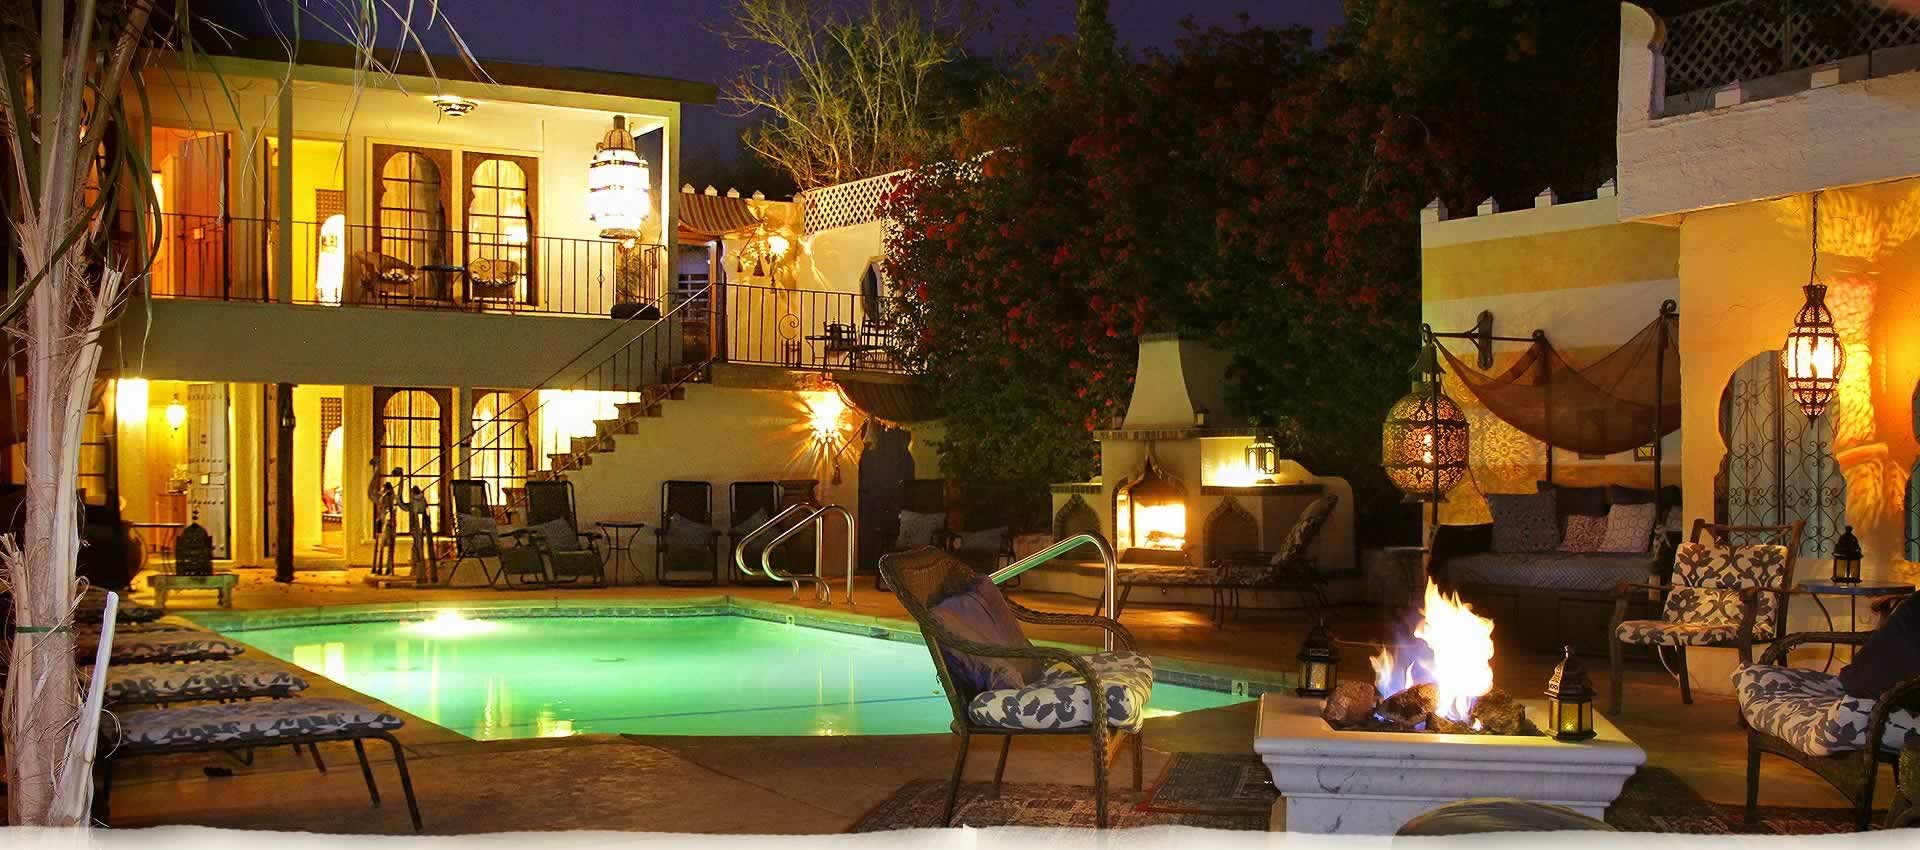 El Morocco Inn & Spa Resort – Desert Hot Springs, CA